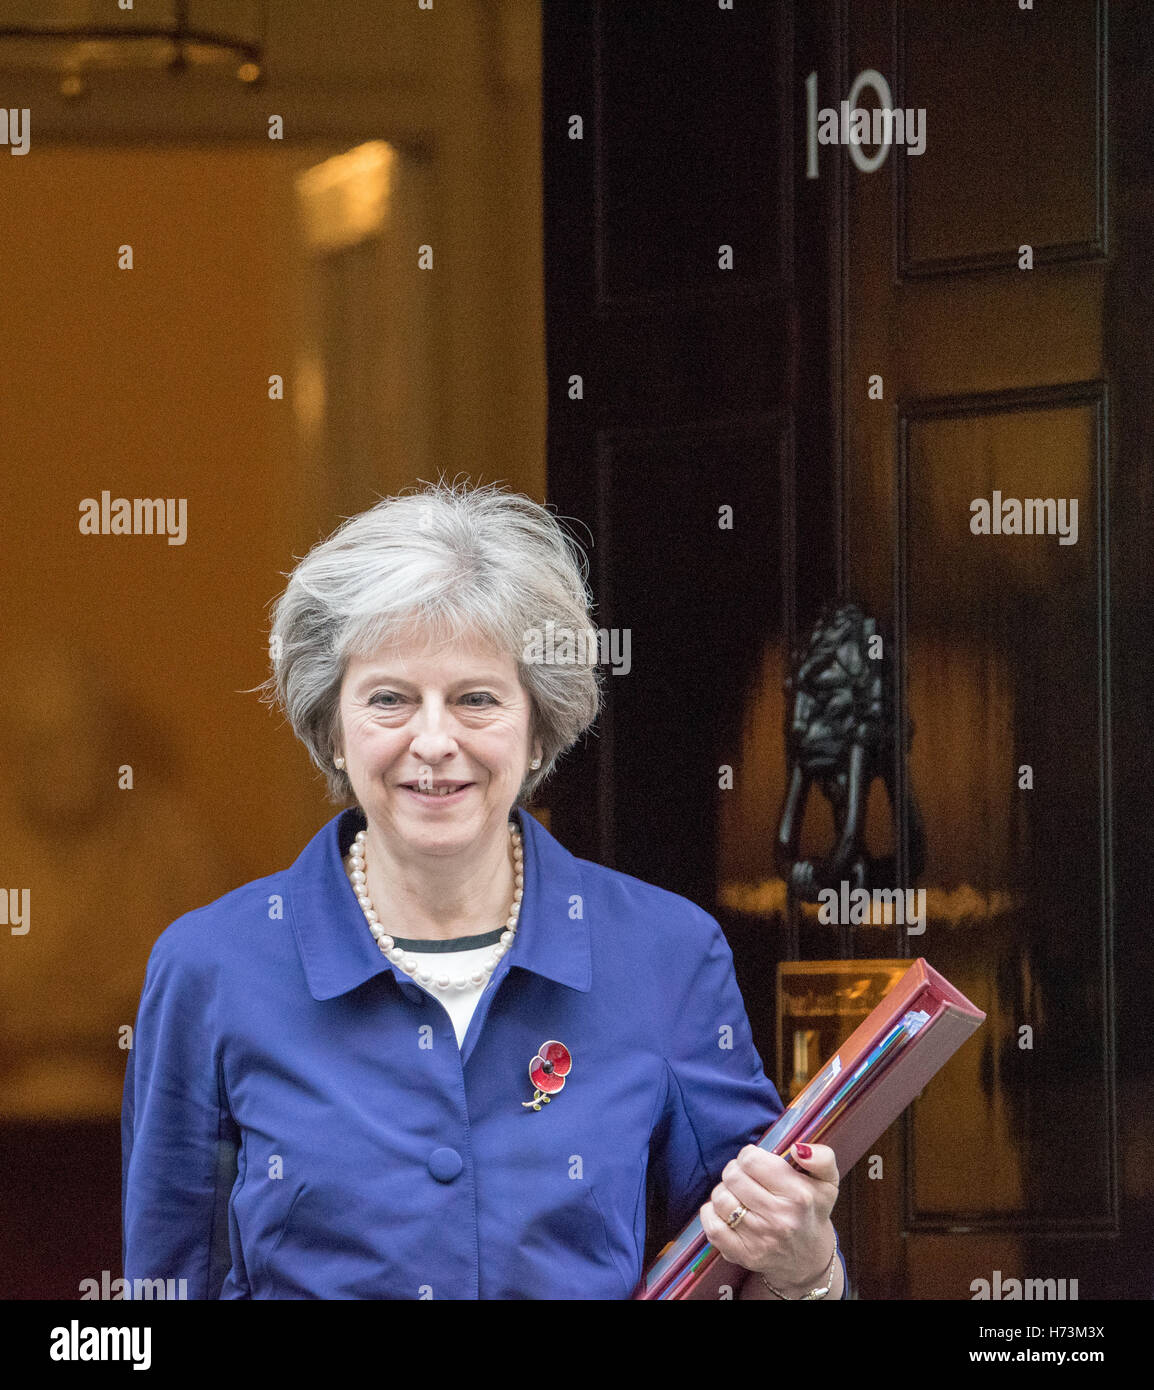 London, UK. 2nd November, 2016. Prime Minister leaves Downing Street Credit:  Ian Davidson/Alamy Live News Stock Photo